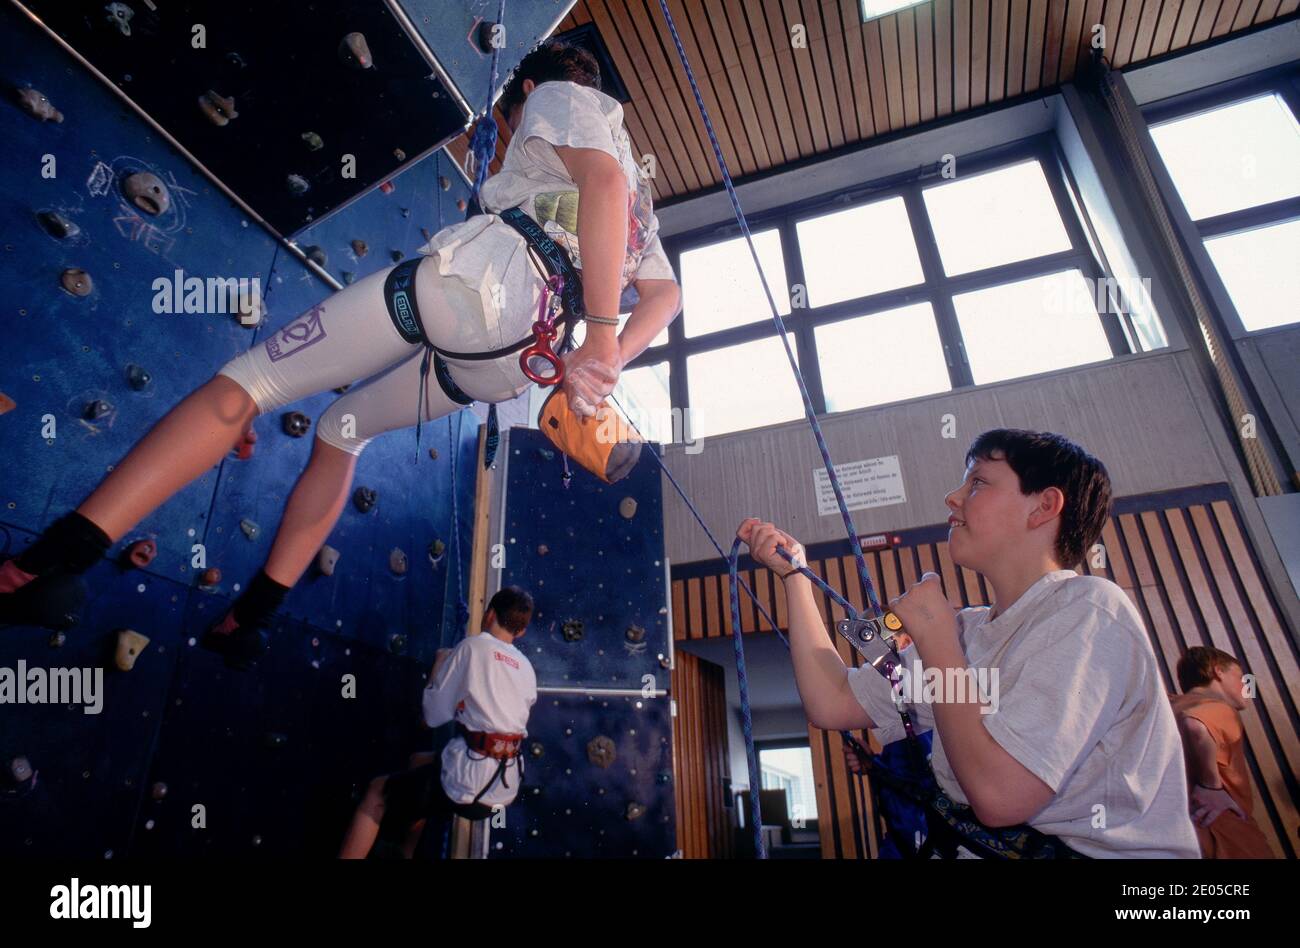 Boys climbing at an indoor climbing centre wall Stock Photo